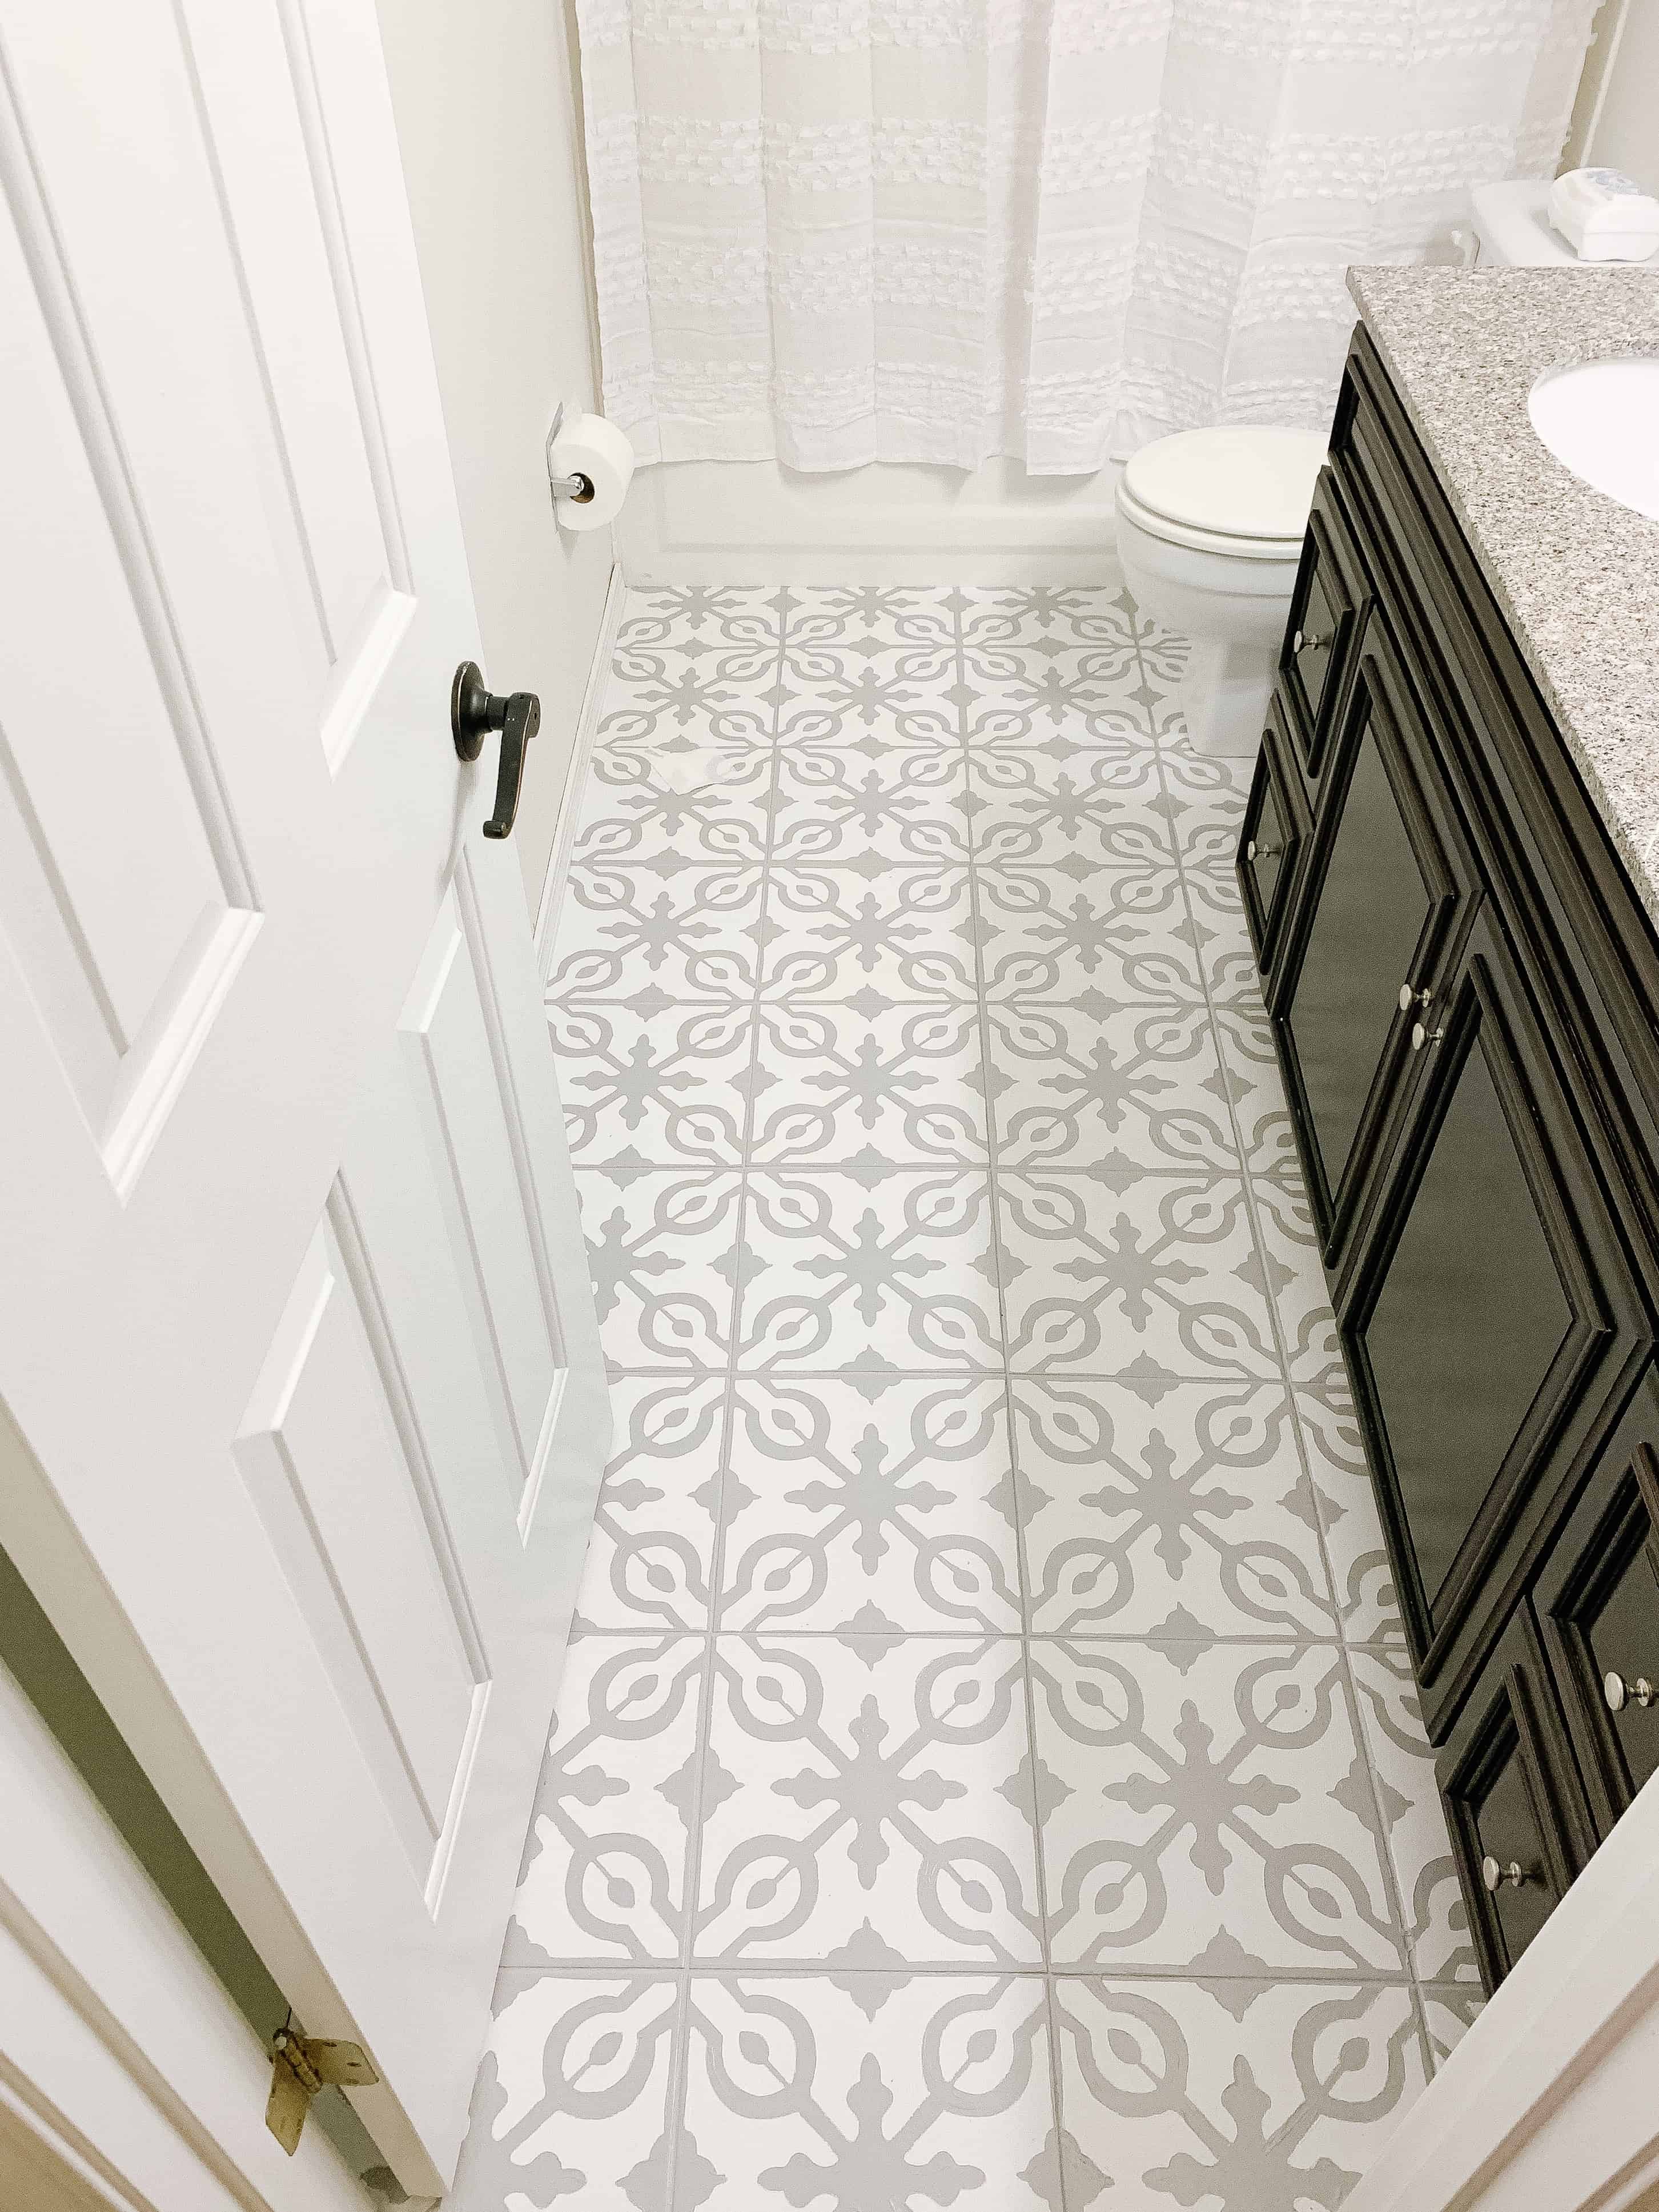 How To Paint Tile Floors, Paint Bathroom Tile